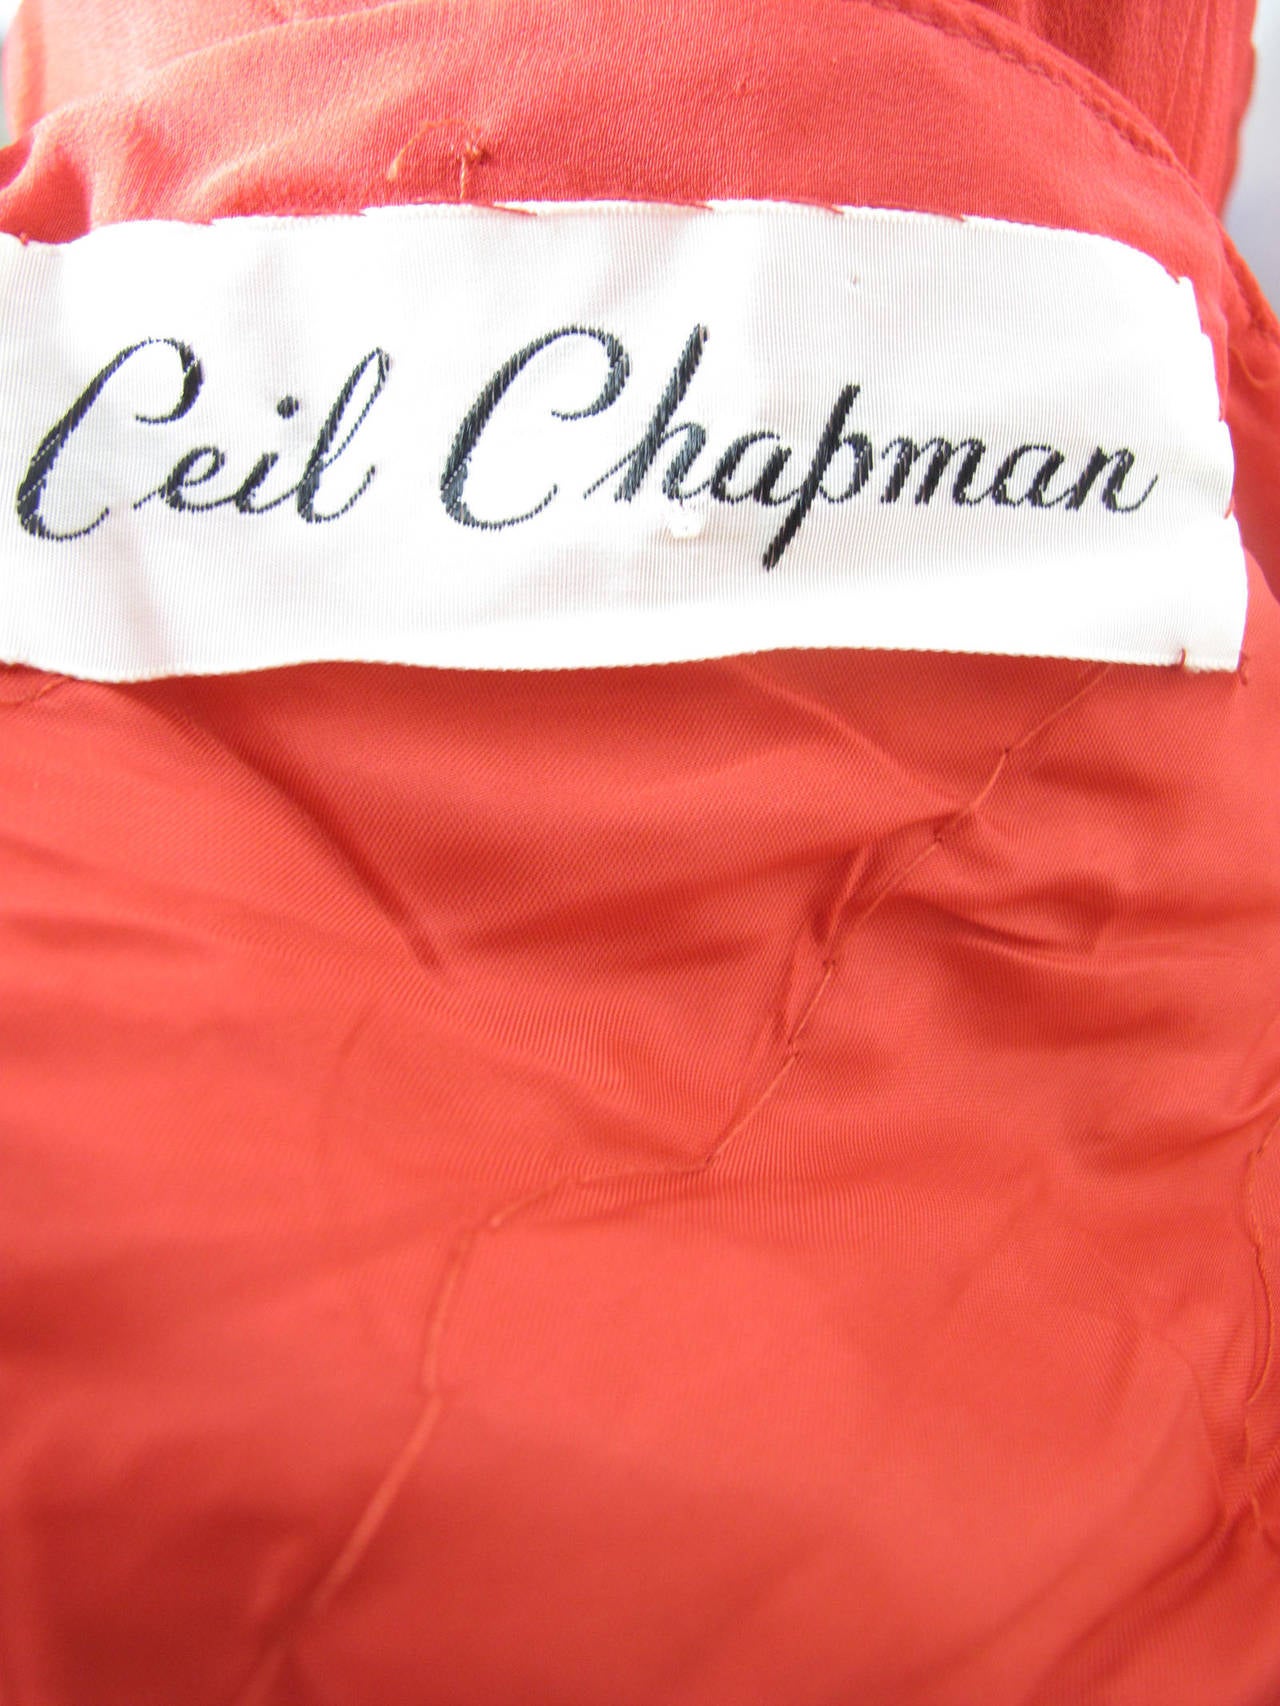 Women's Ceil Chapman Iconic Red Silk Chiffon Cocktail Dress, 1950s 